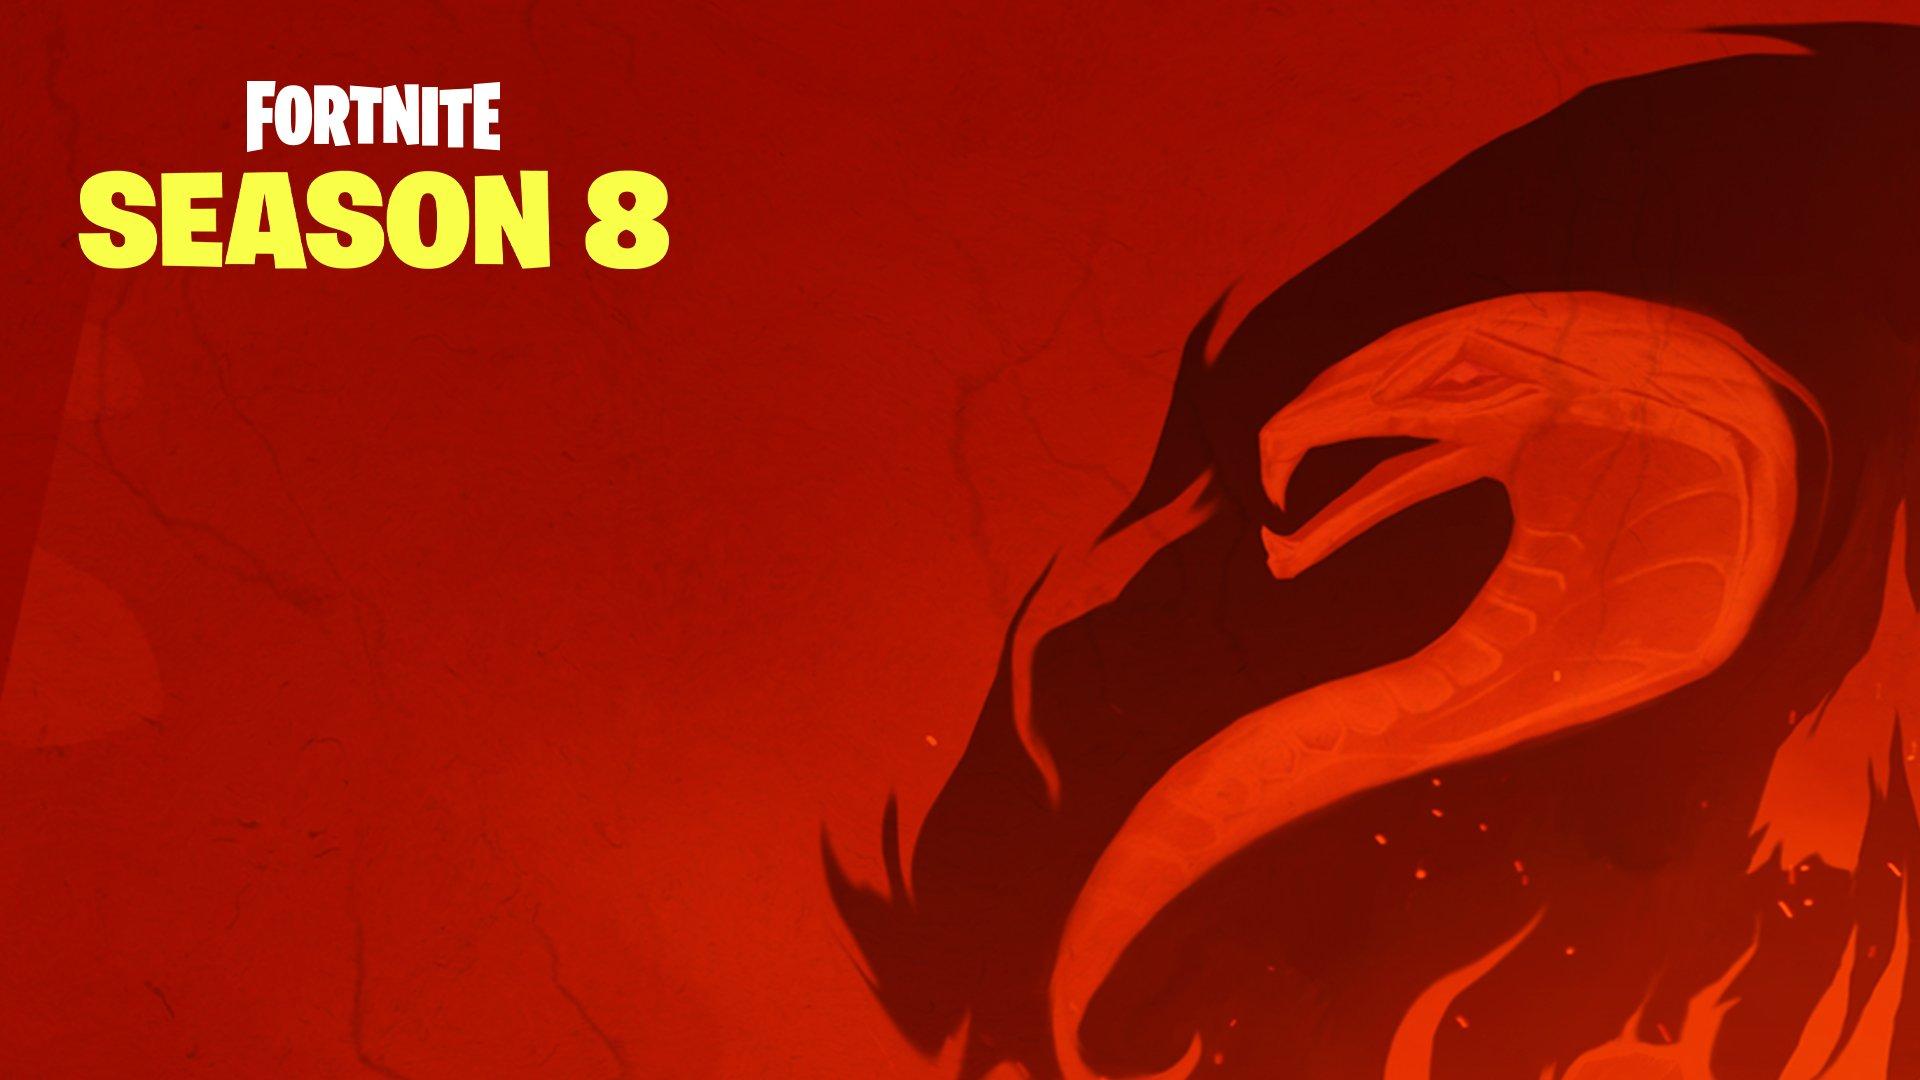 Fortnite Season 8: How to Get the Season 8 Battle Pass